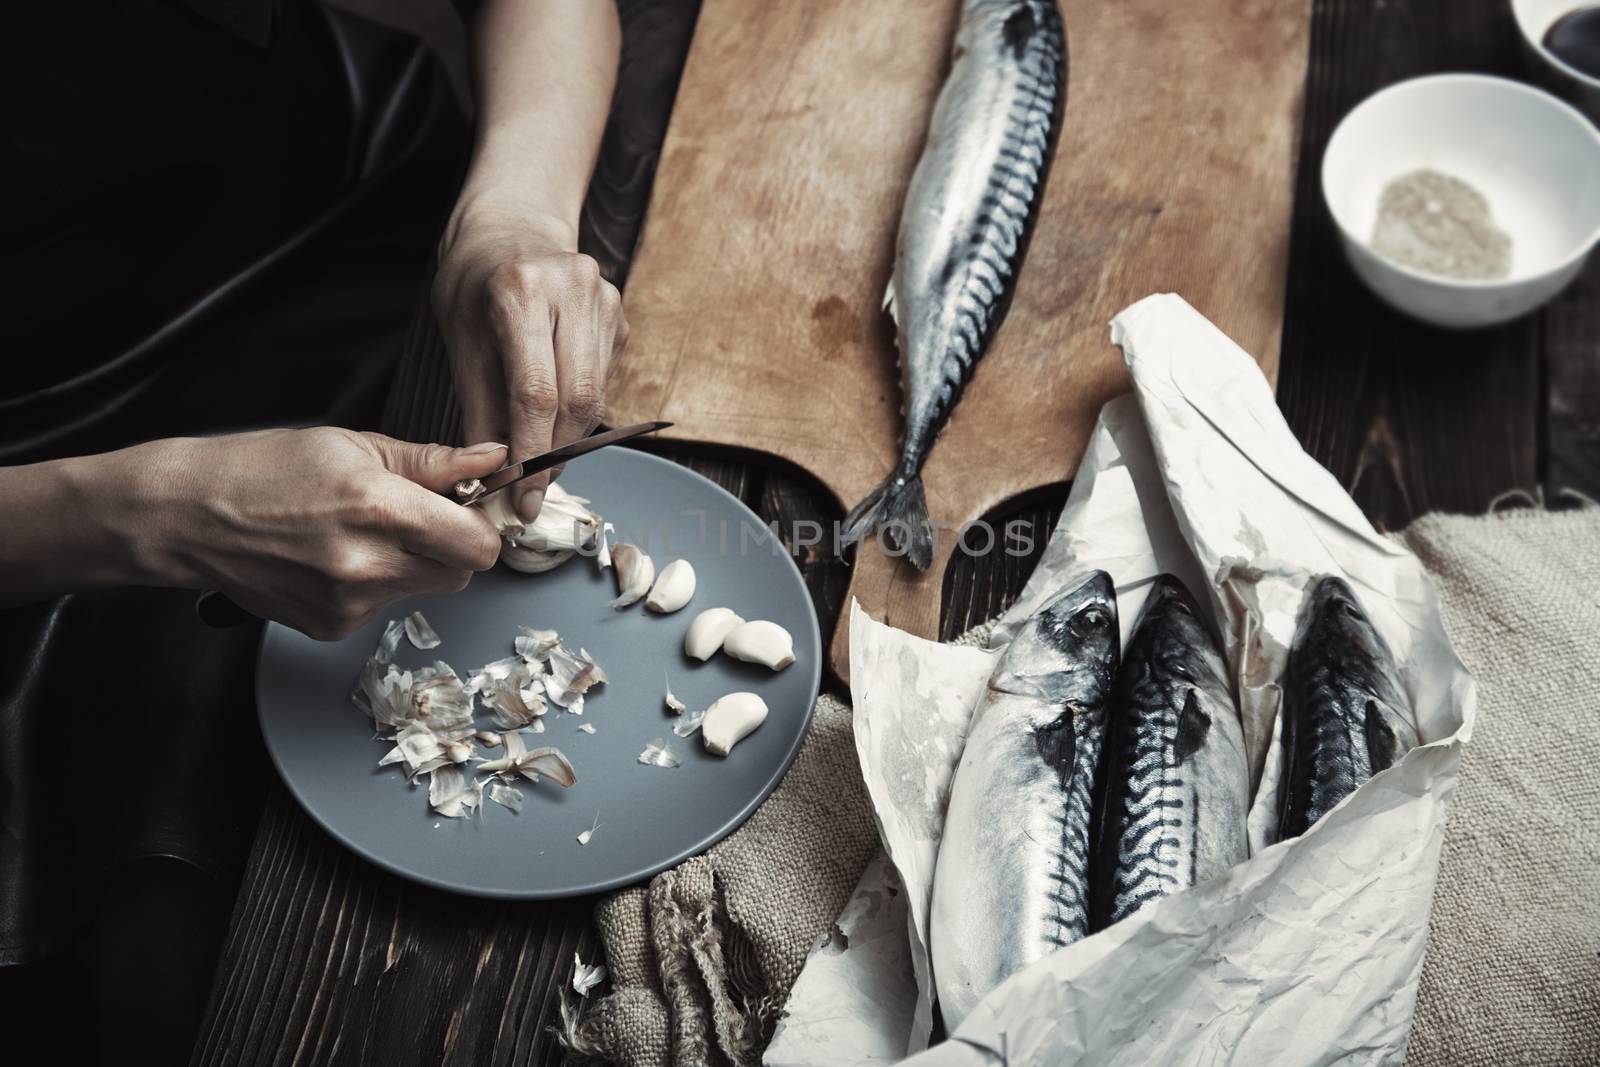 Woman preparing mackerel fish